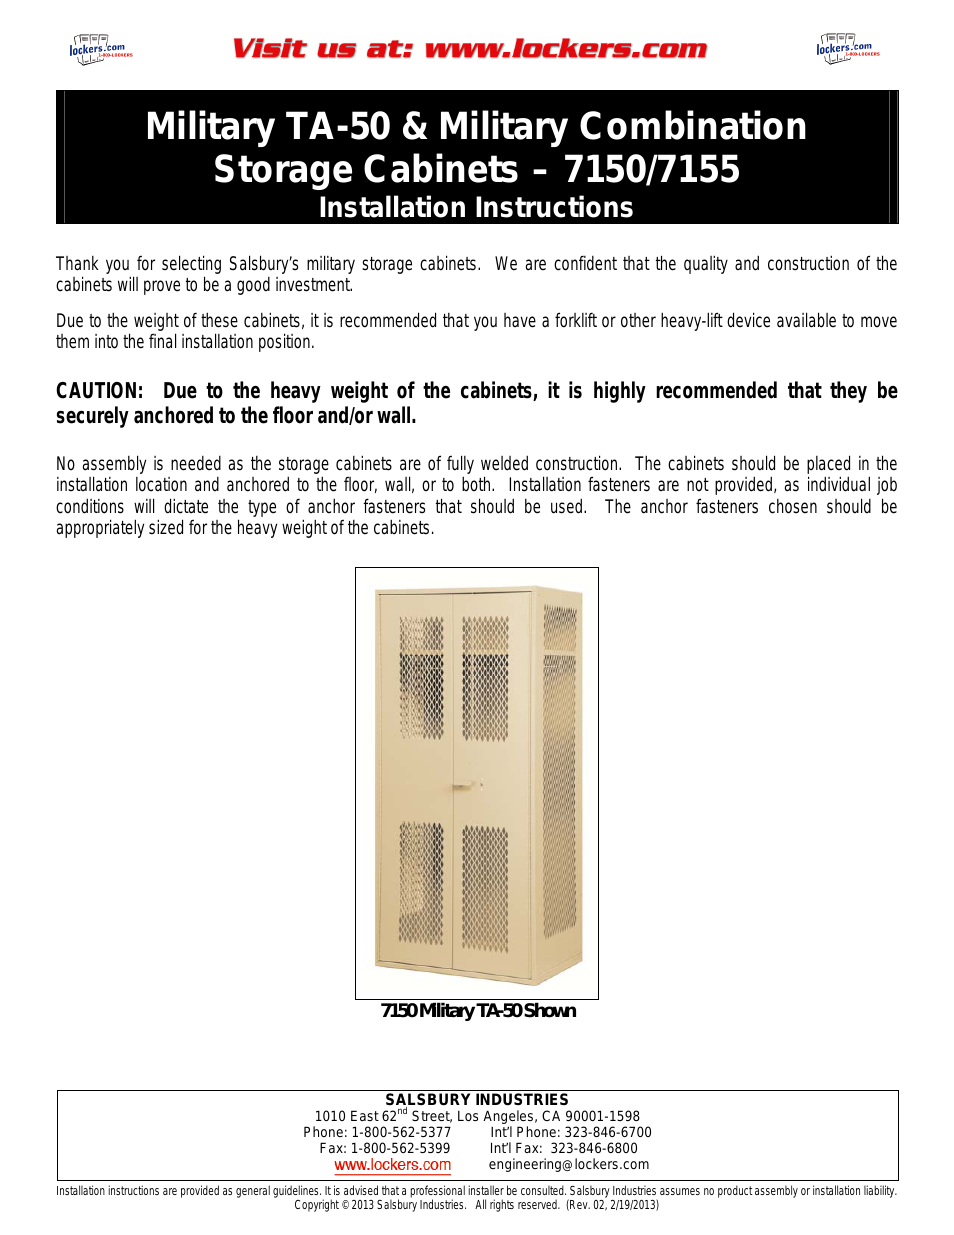 7150 Military TA-50 Storage Cabinets